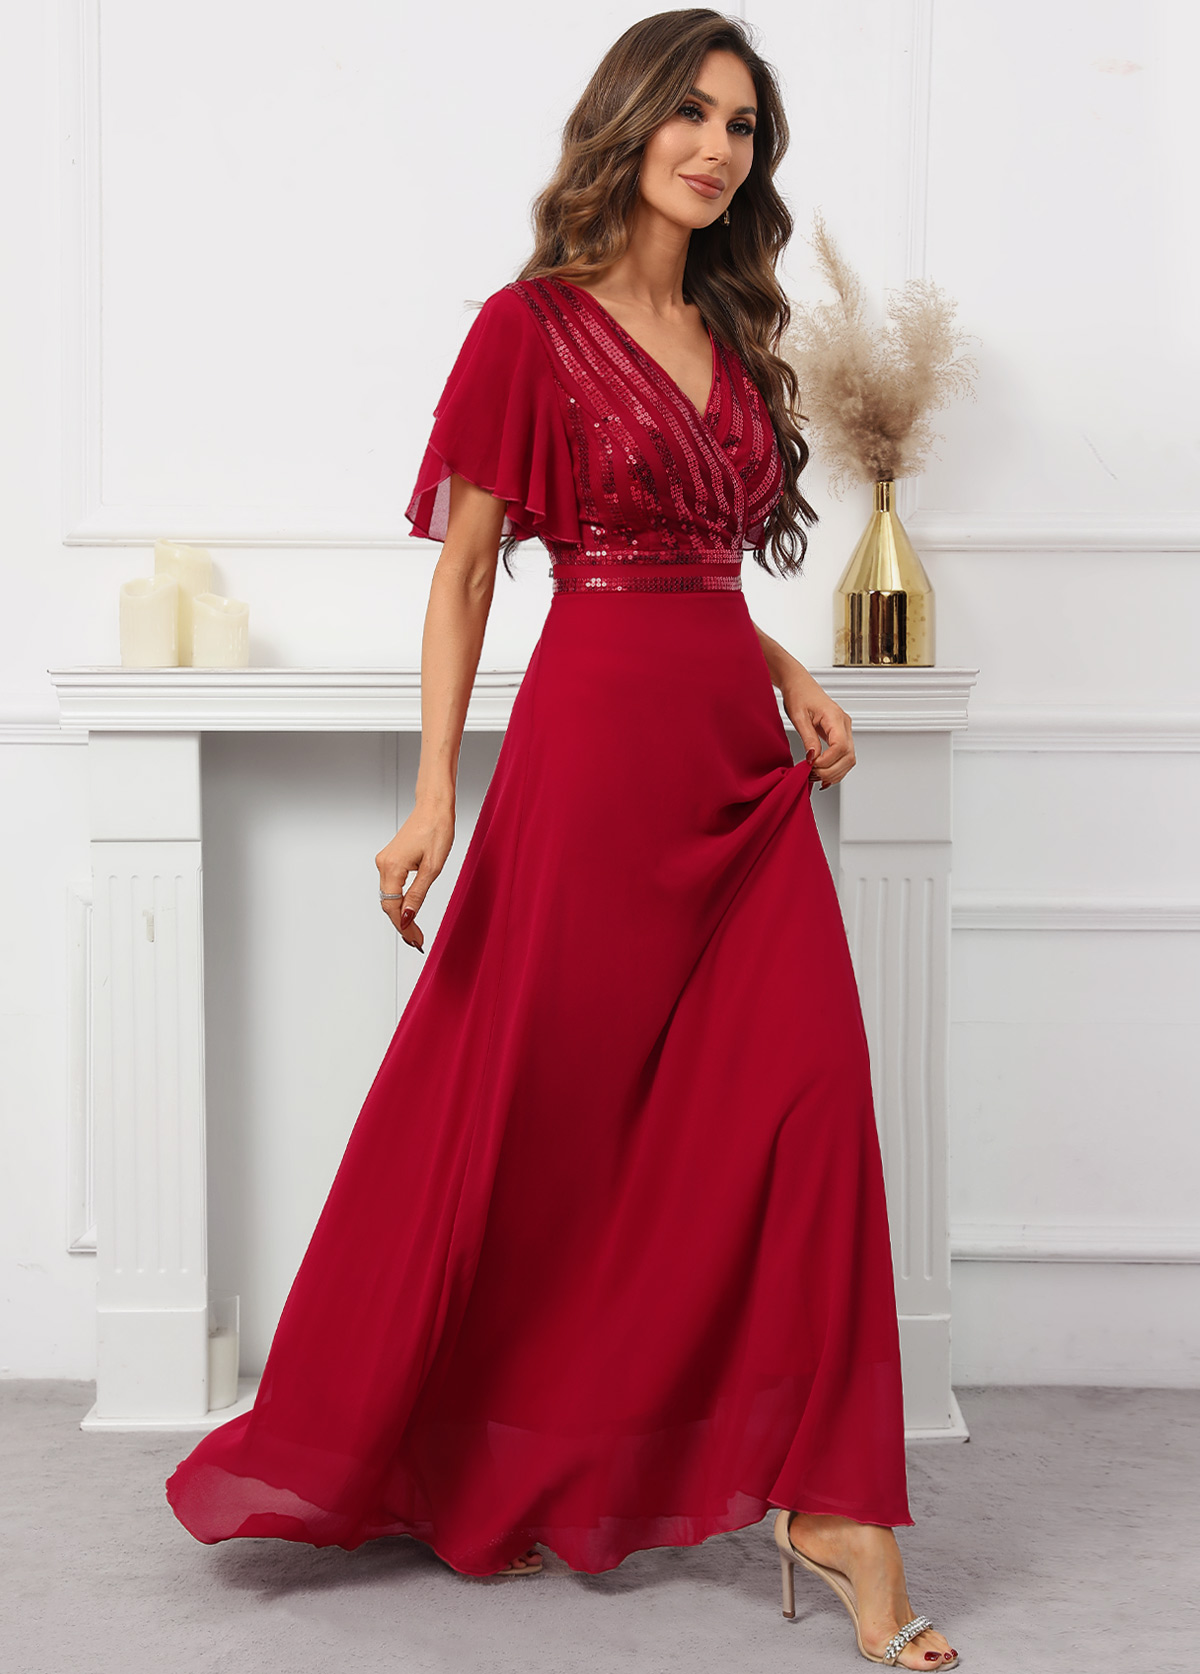 Sequin Red Short Sleeve V Neck Dress